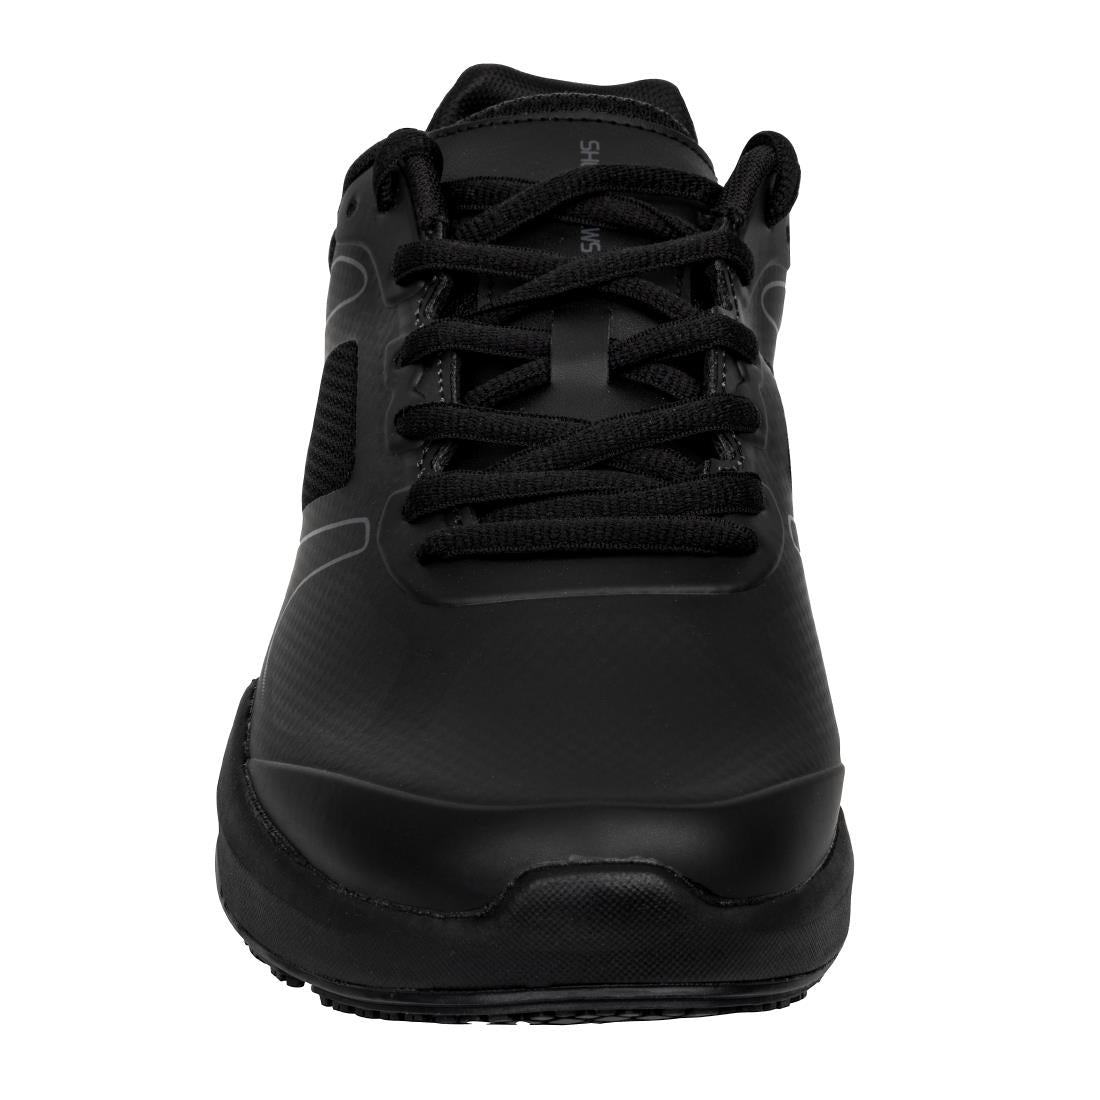 BB586-42 Shoes for Crews Men's Evolution Trainers Black Size 42